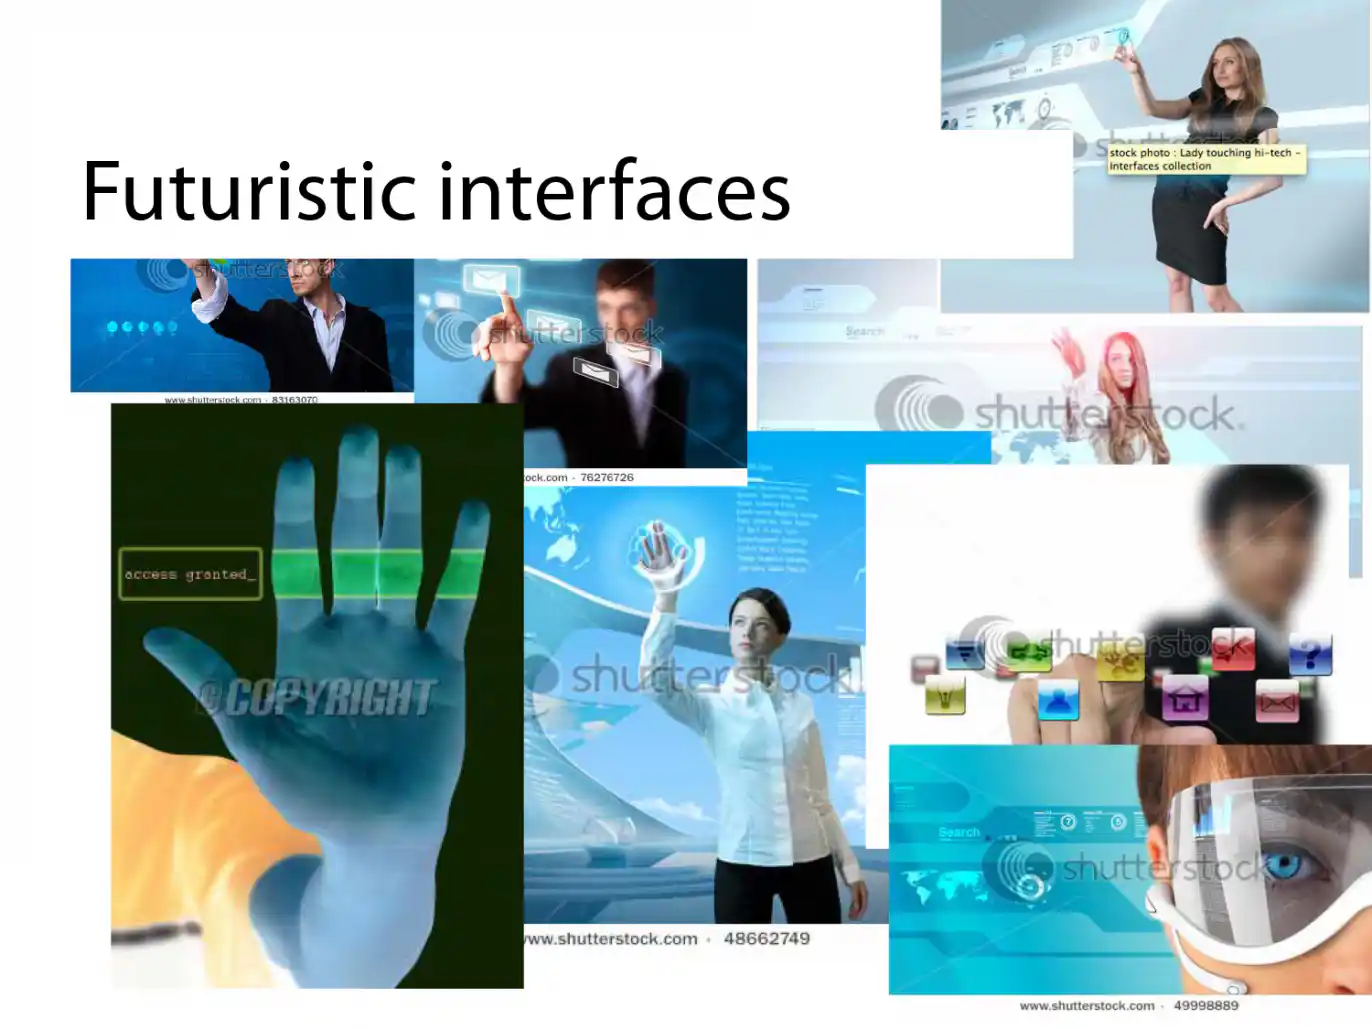 image showing futuristic interfaces